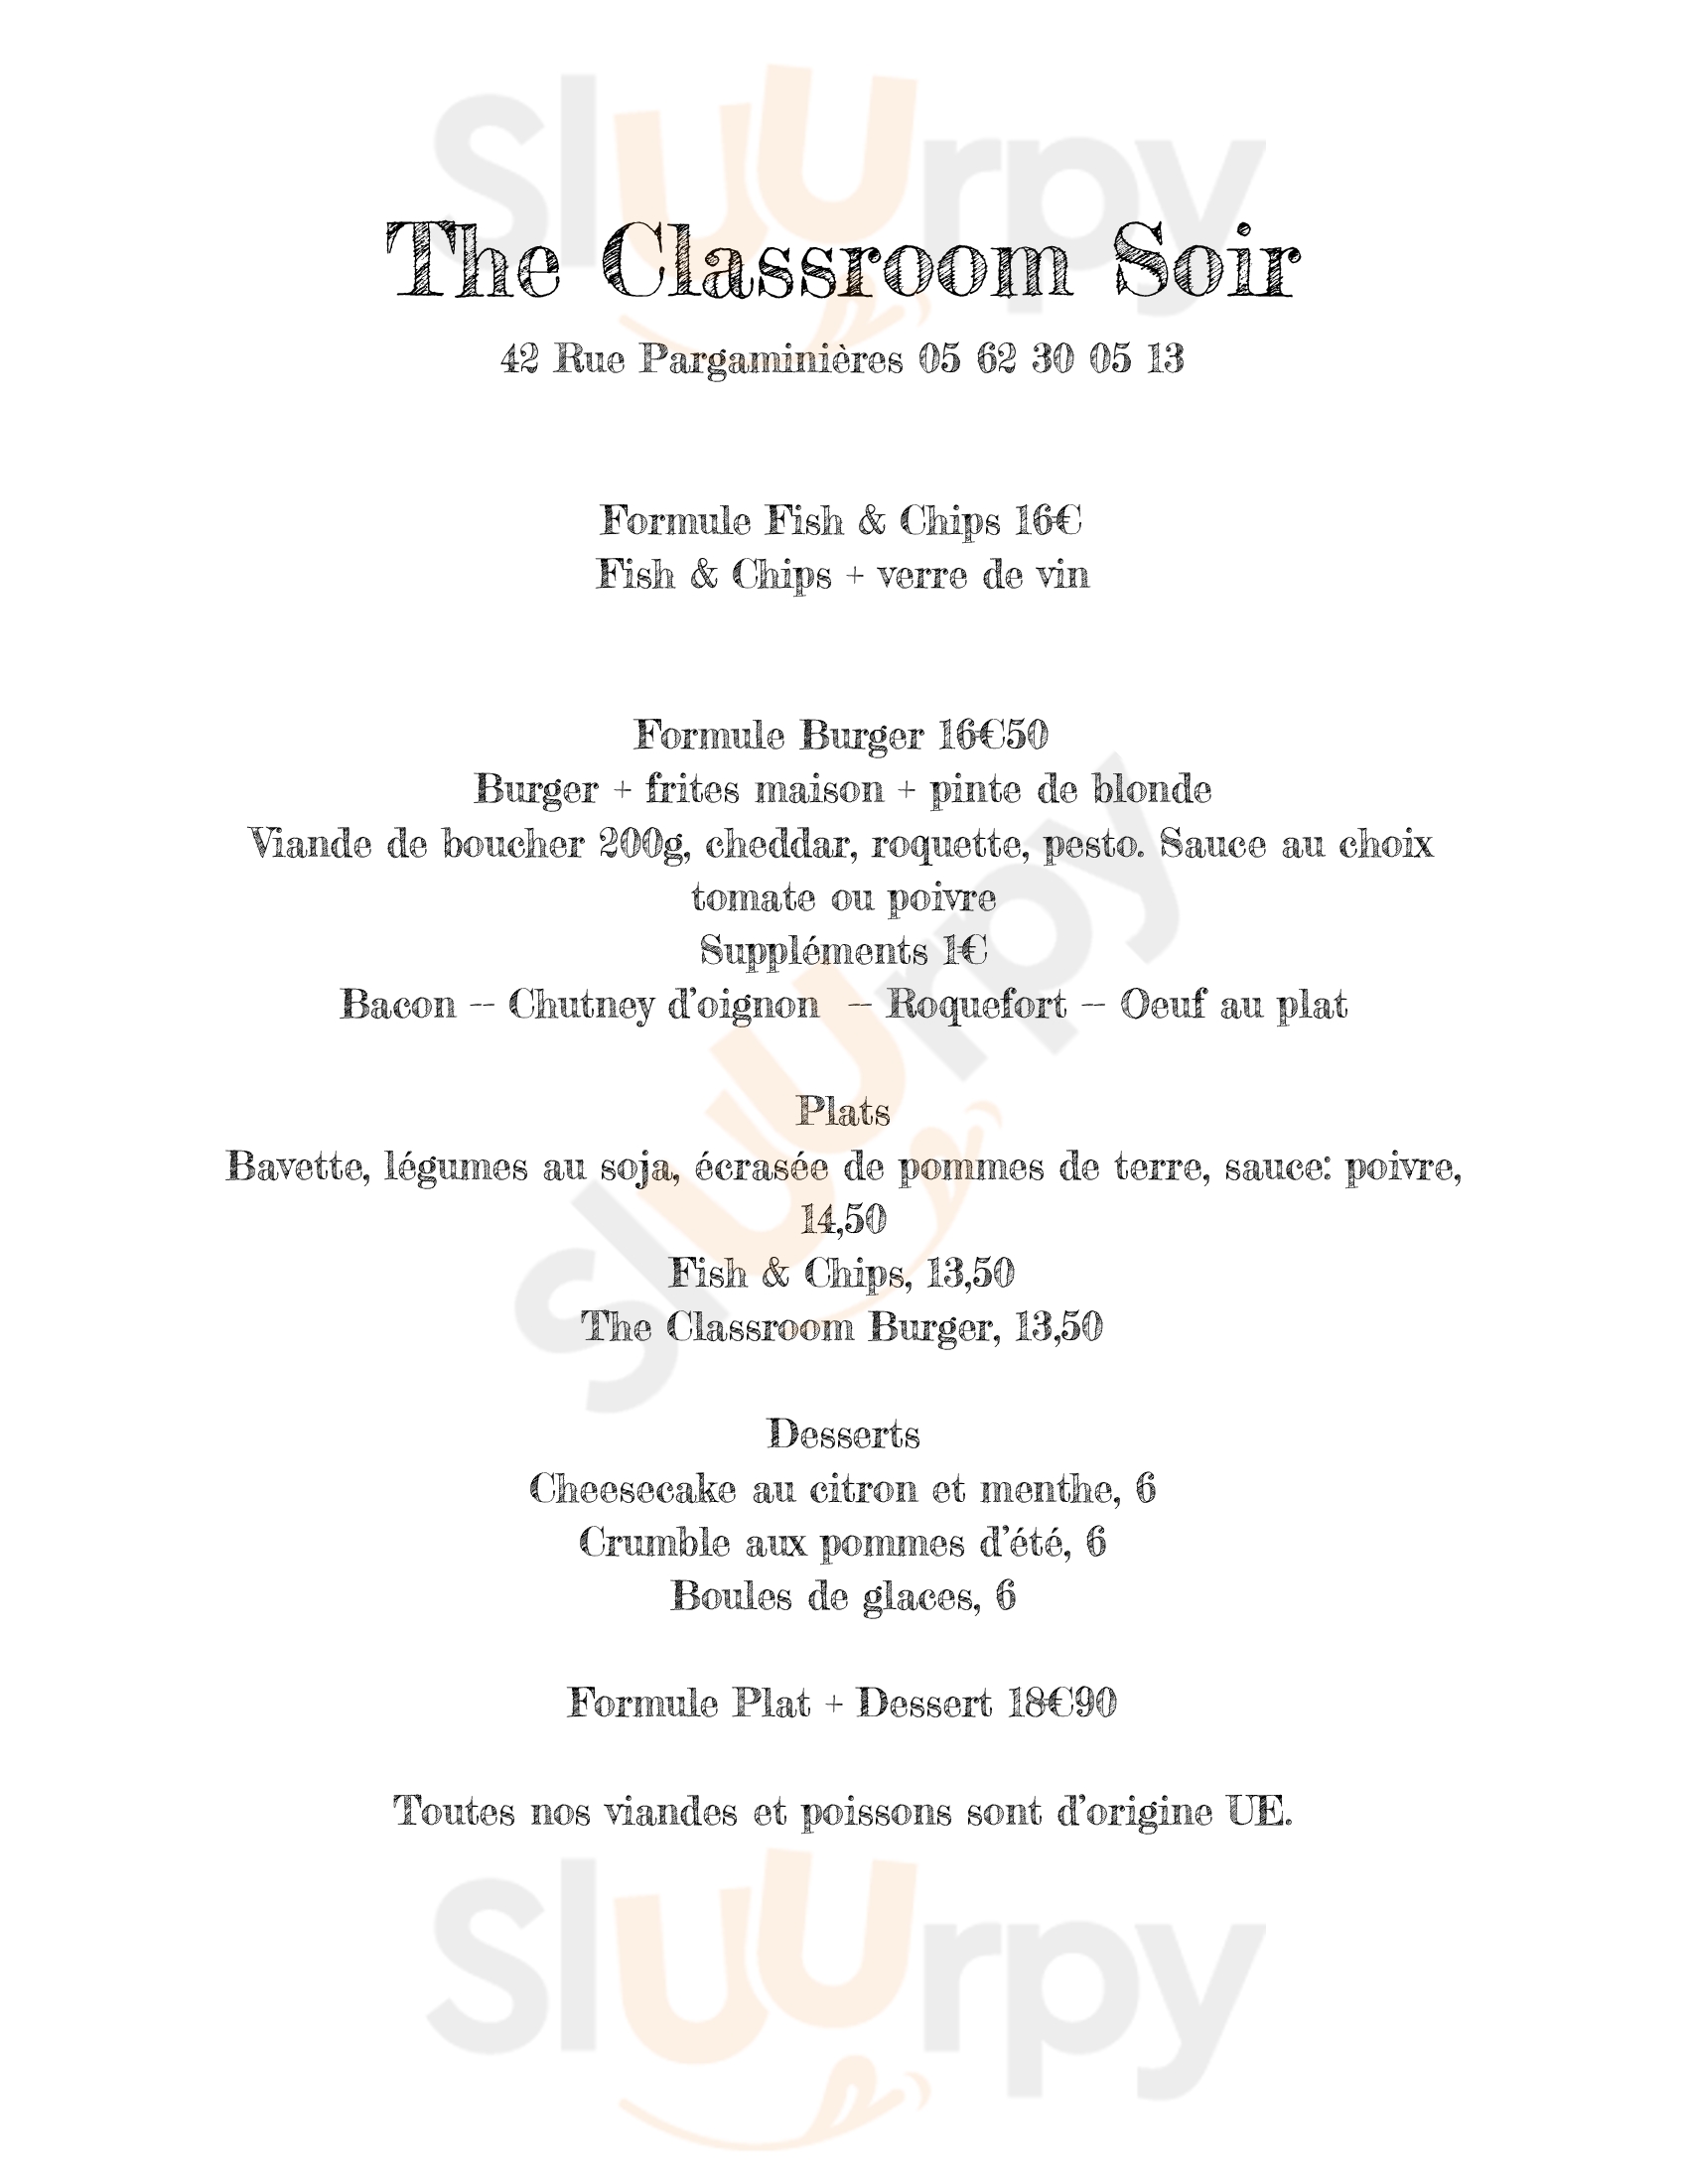 The Classroom Toulouse Toulouse Menu - 1